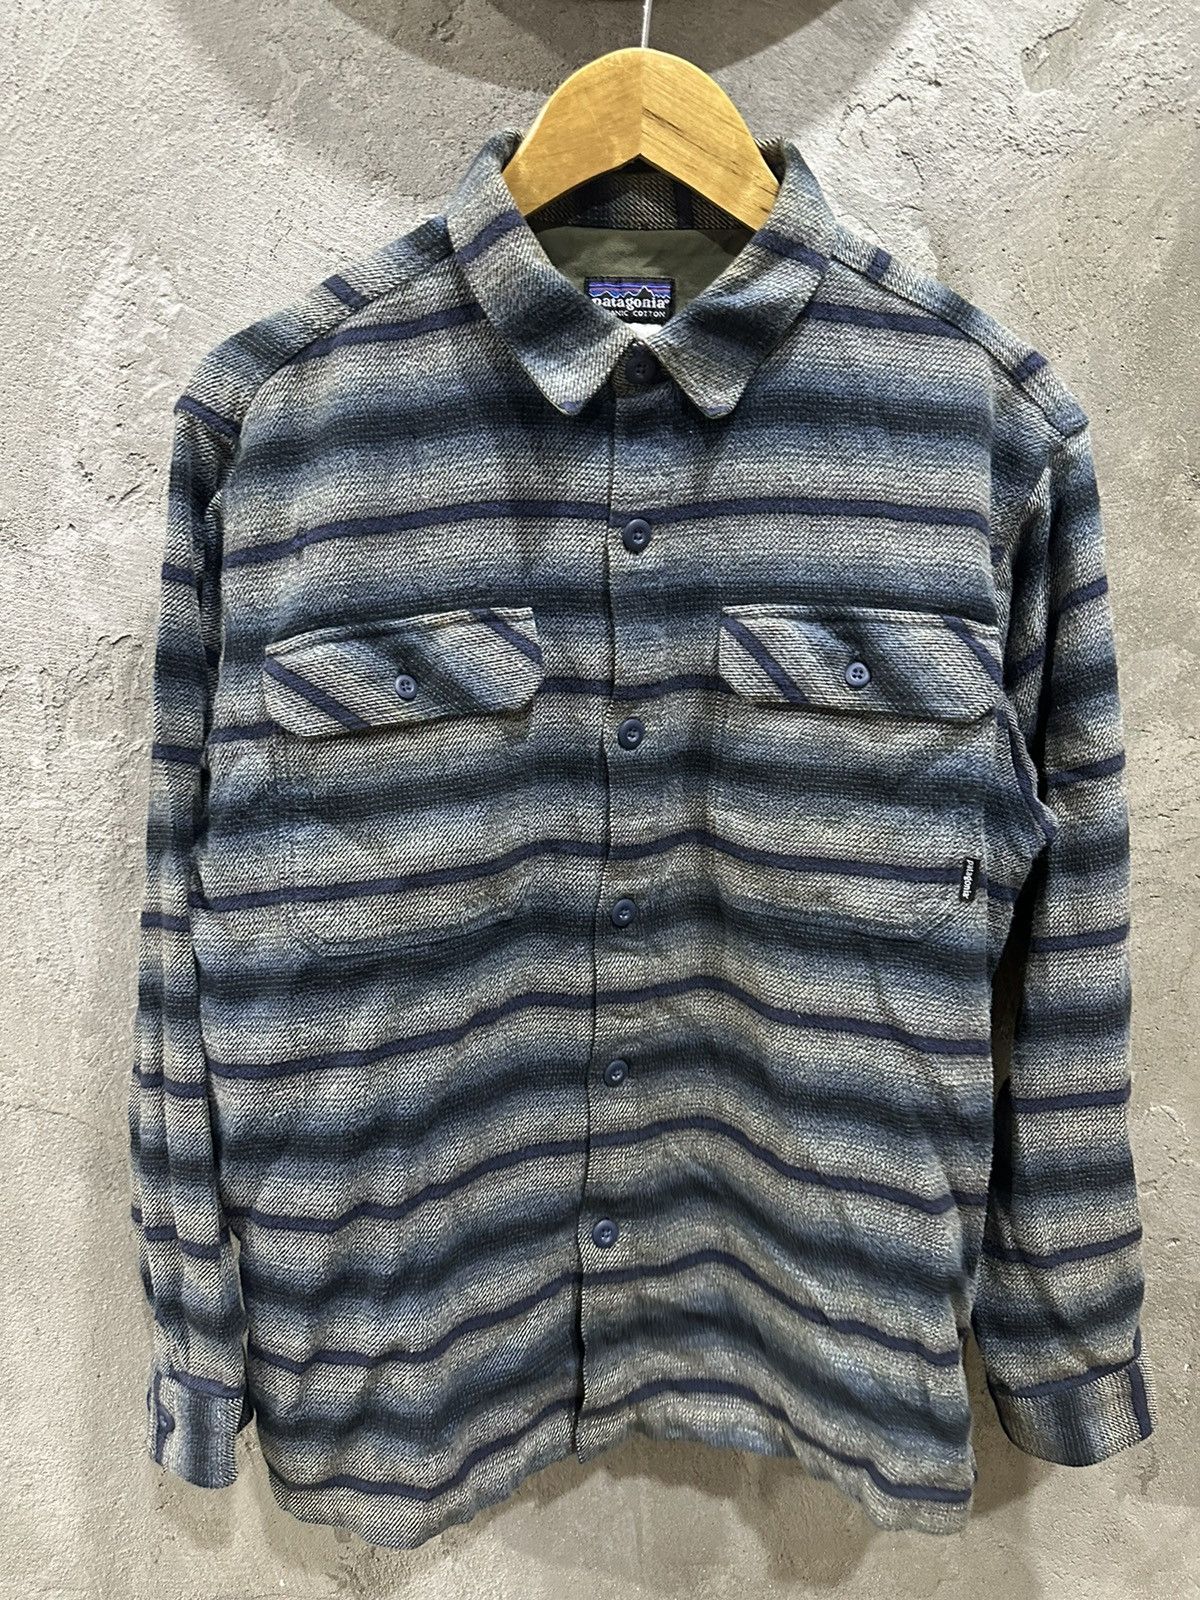 Patagonia Heavy Organic Cotton Flannel Shirt - 1